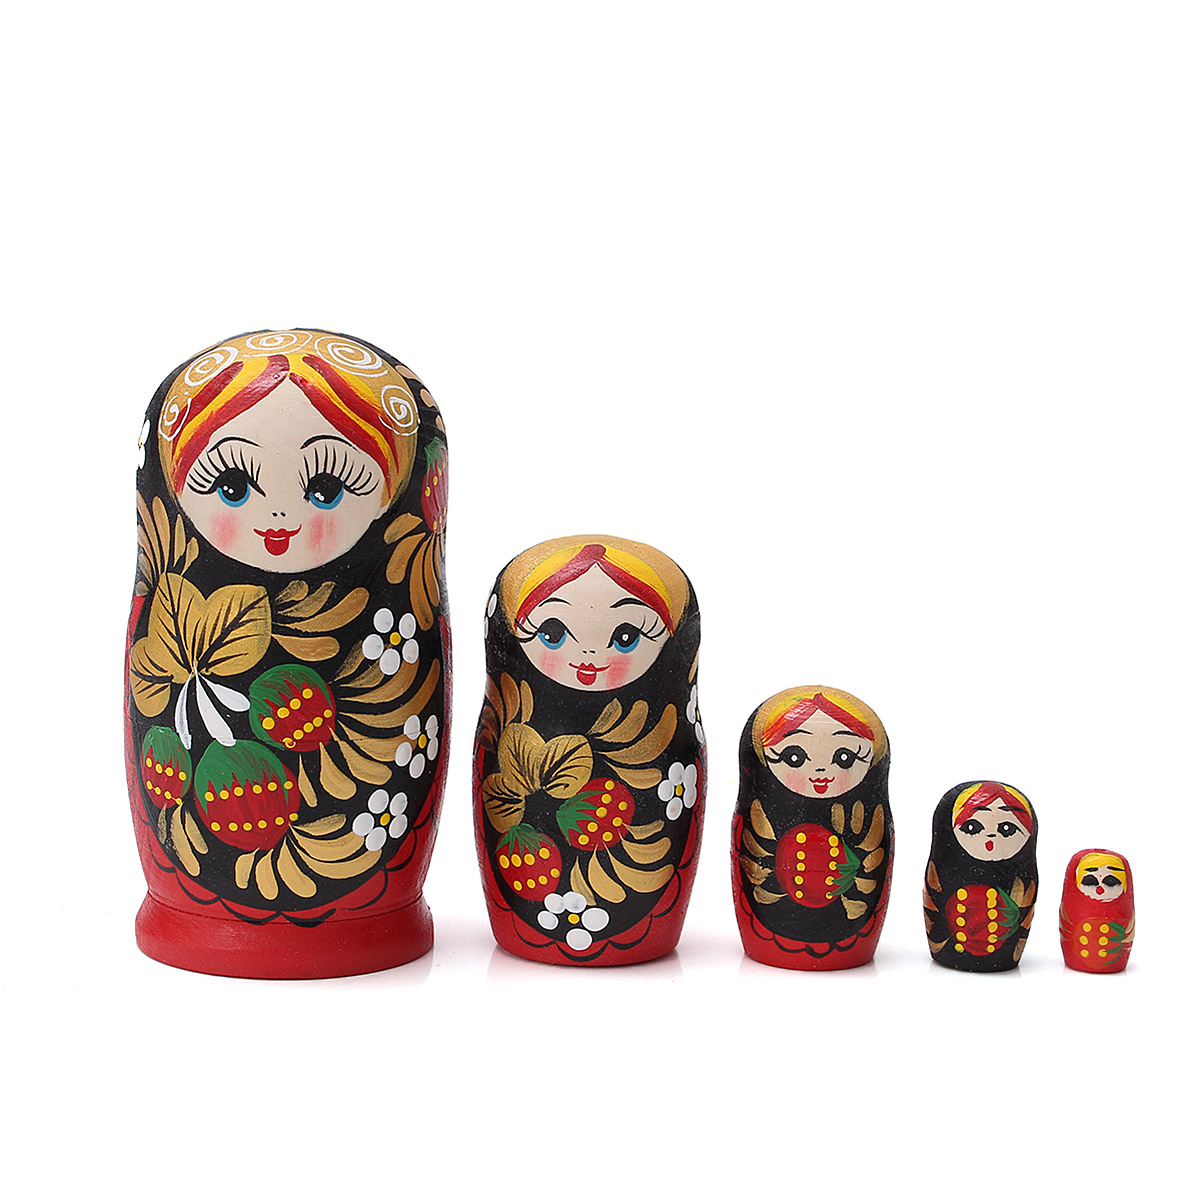 5PCSSet-Wooden-Doll-Matryoshka-Nesting-Russian-Babushka-Toy-Gift-Decor-Collection-1182666-1